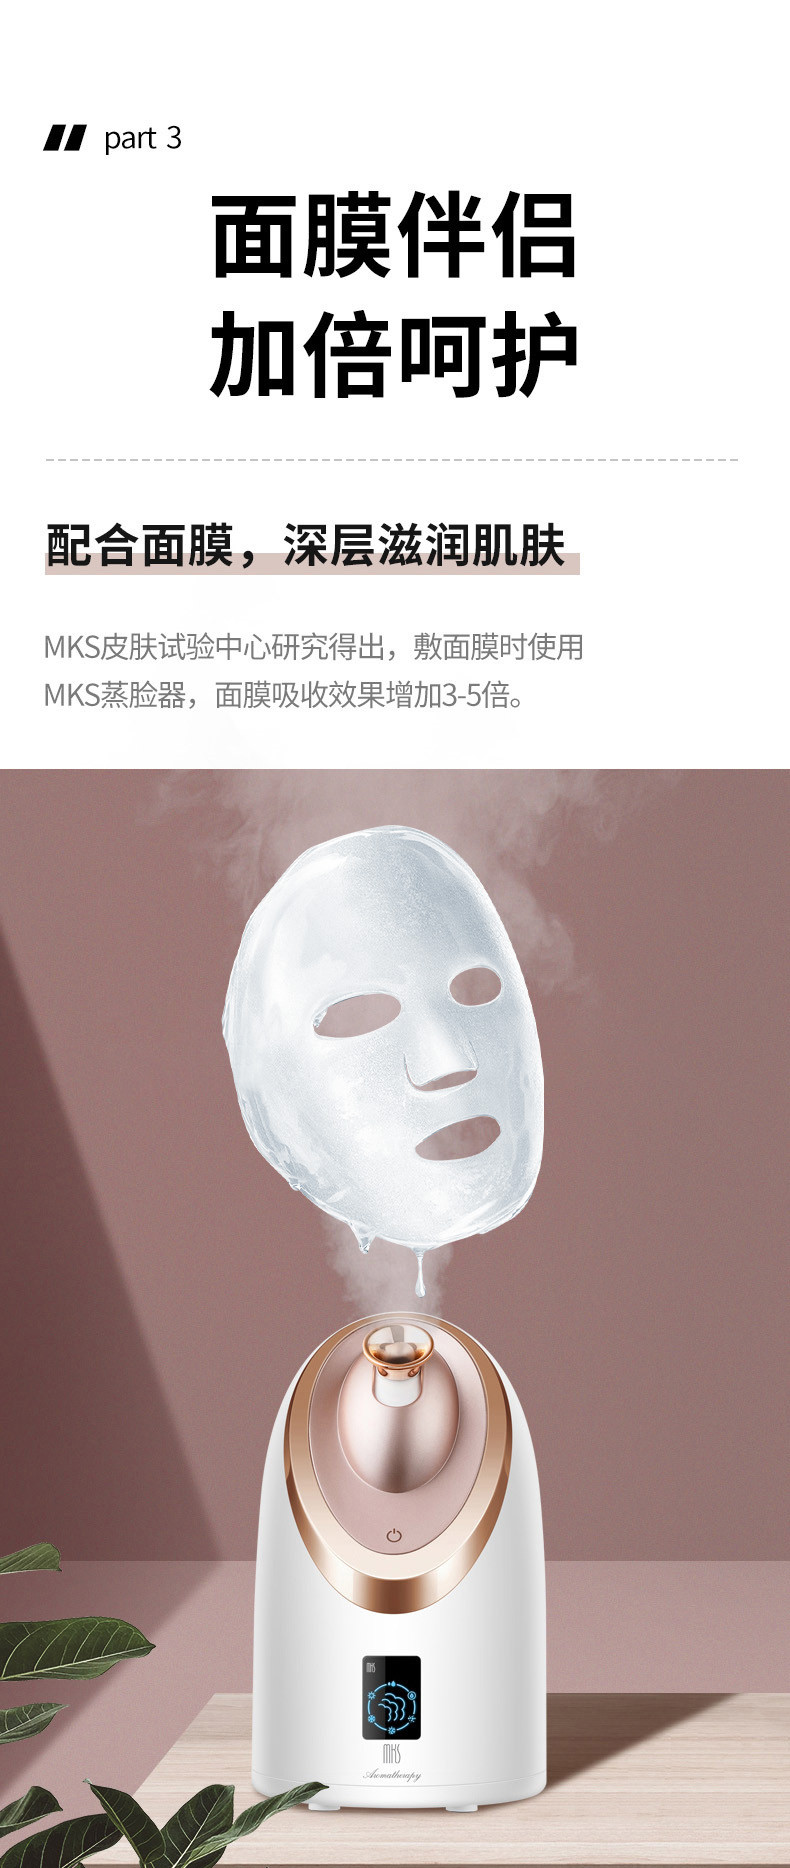 MKS 美克斯蒸脸仪 美容仪器 家用脸部香薰蒸脸器冷热喷纳米喷雾保湿补水仪